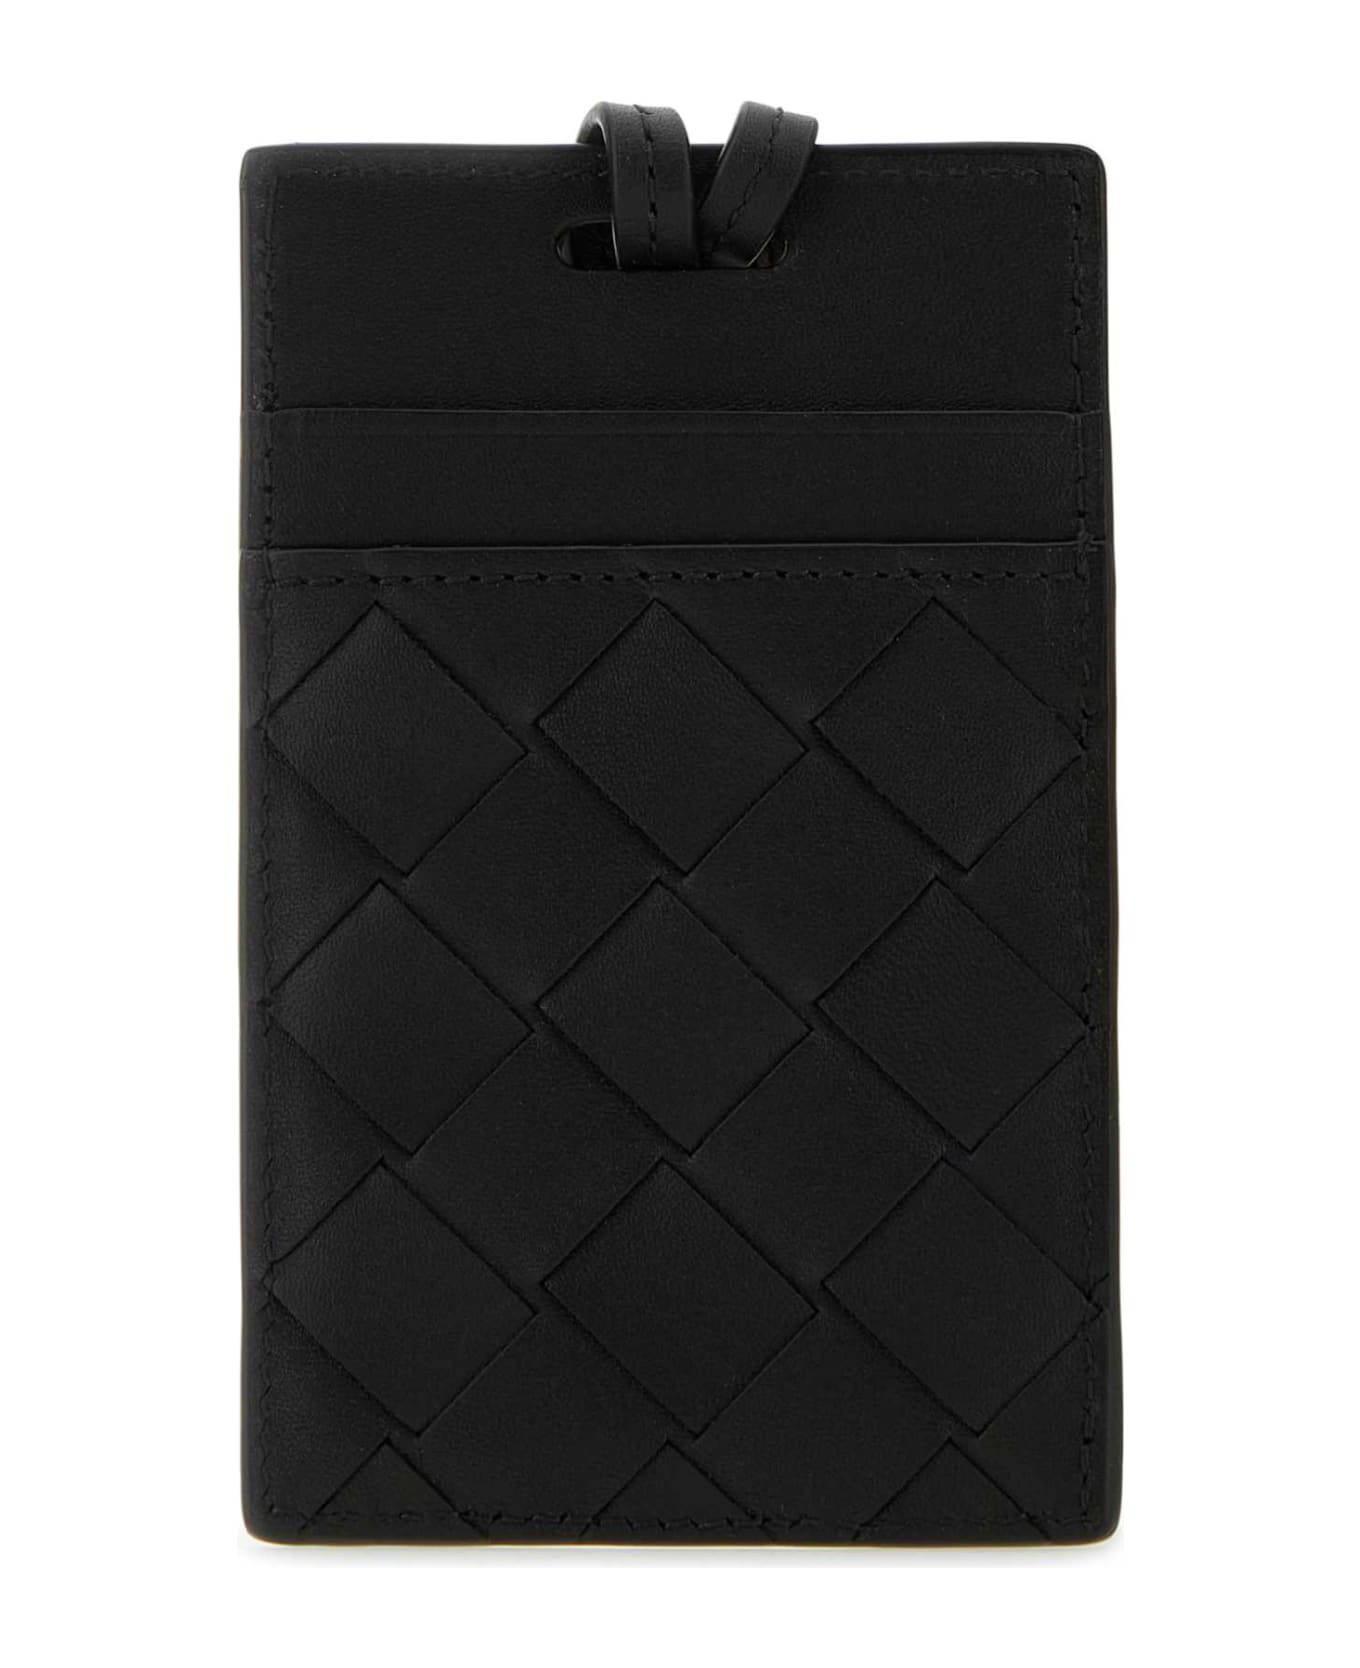 Bottega BACK Veneta Black Leather Card Holder - BLACKSILVER